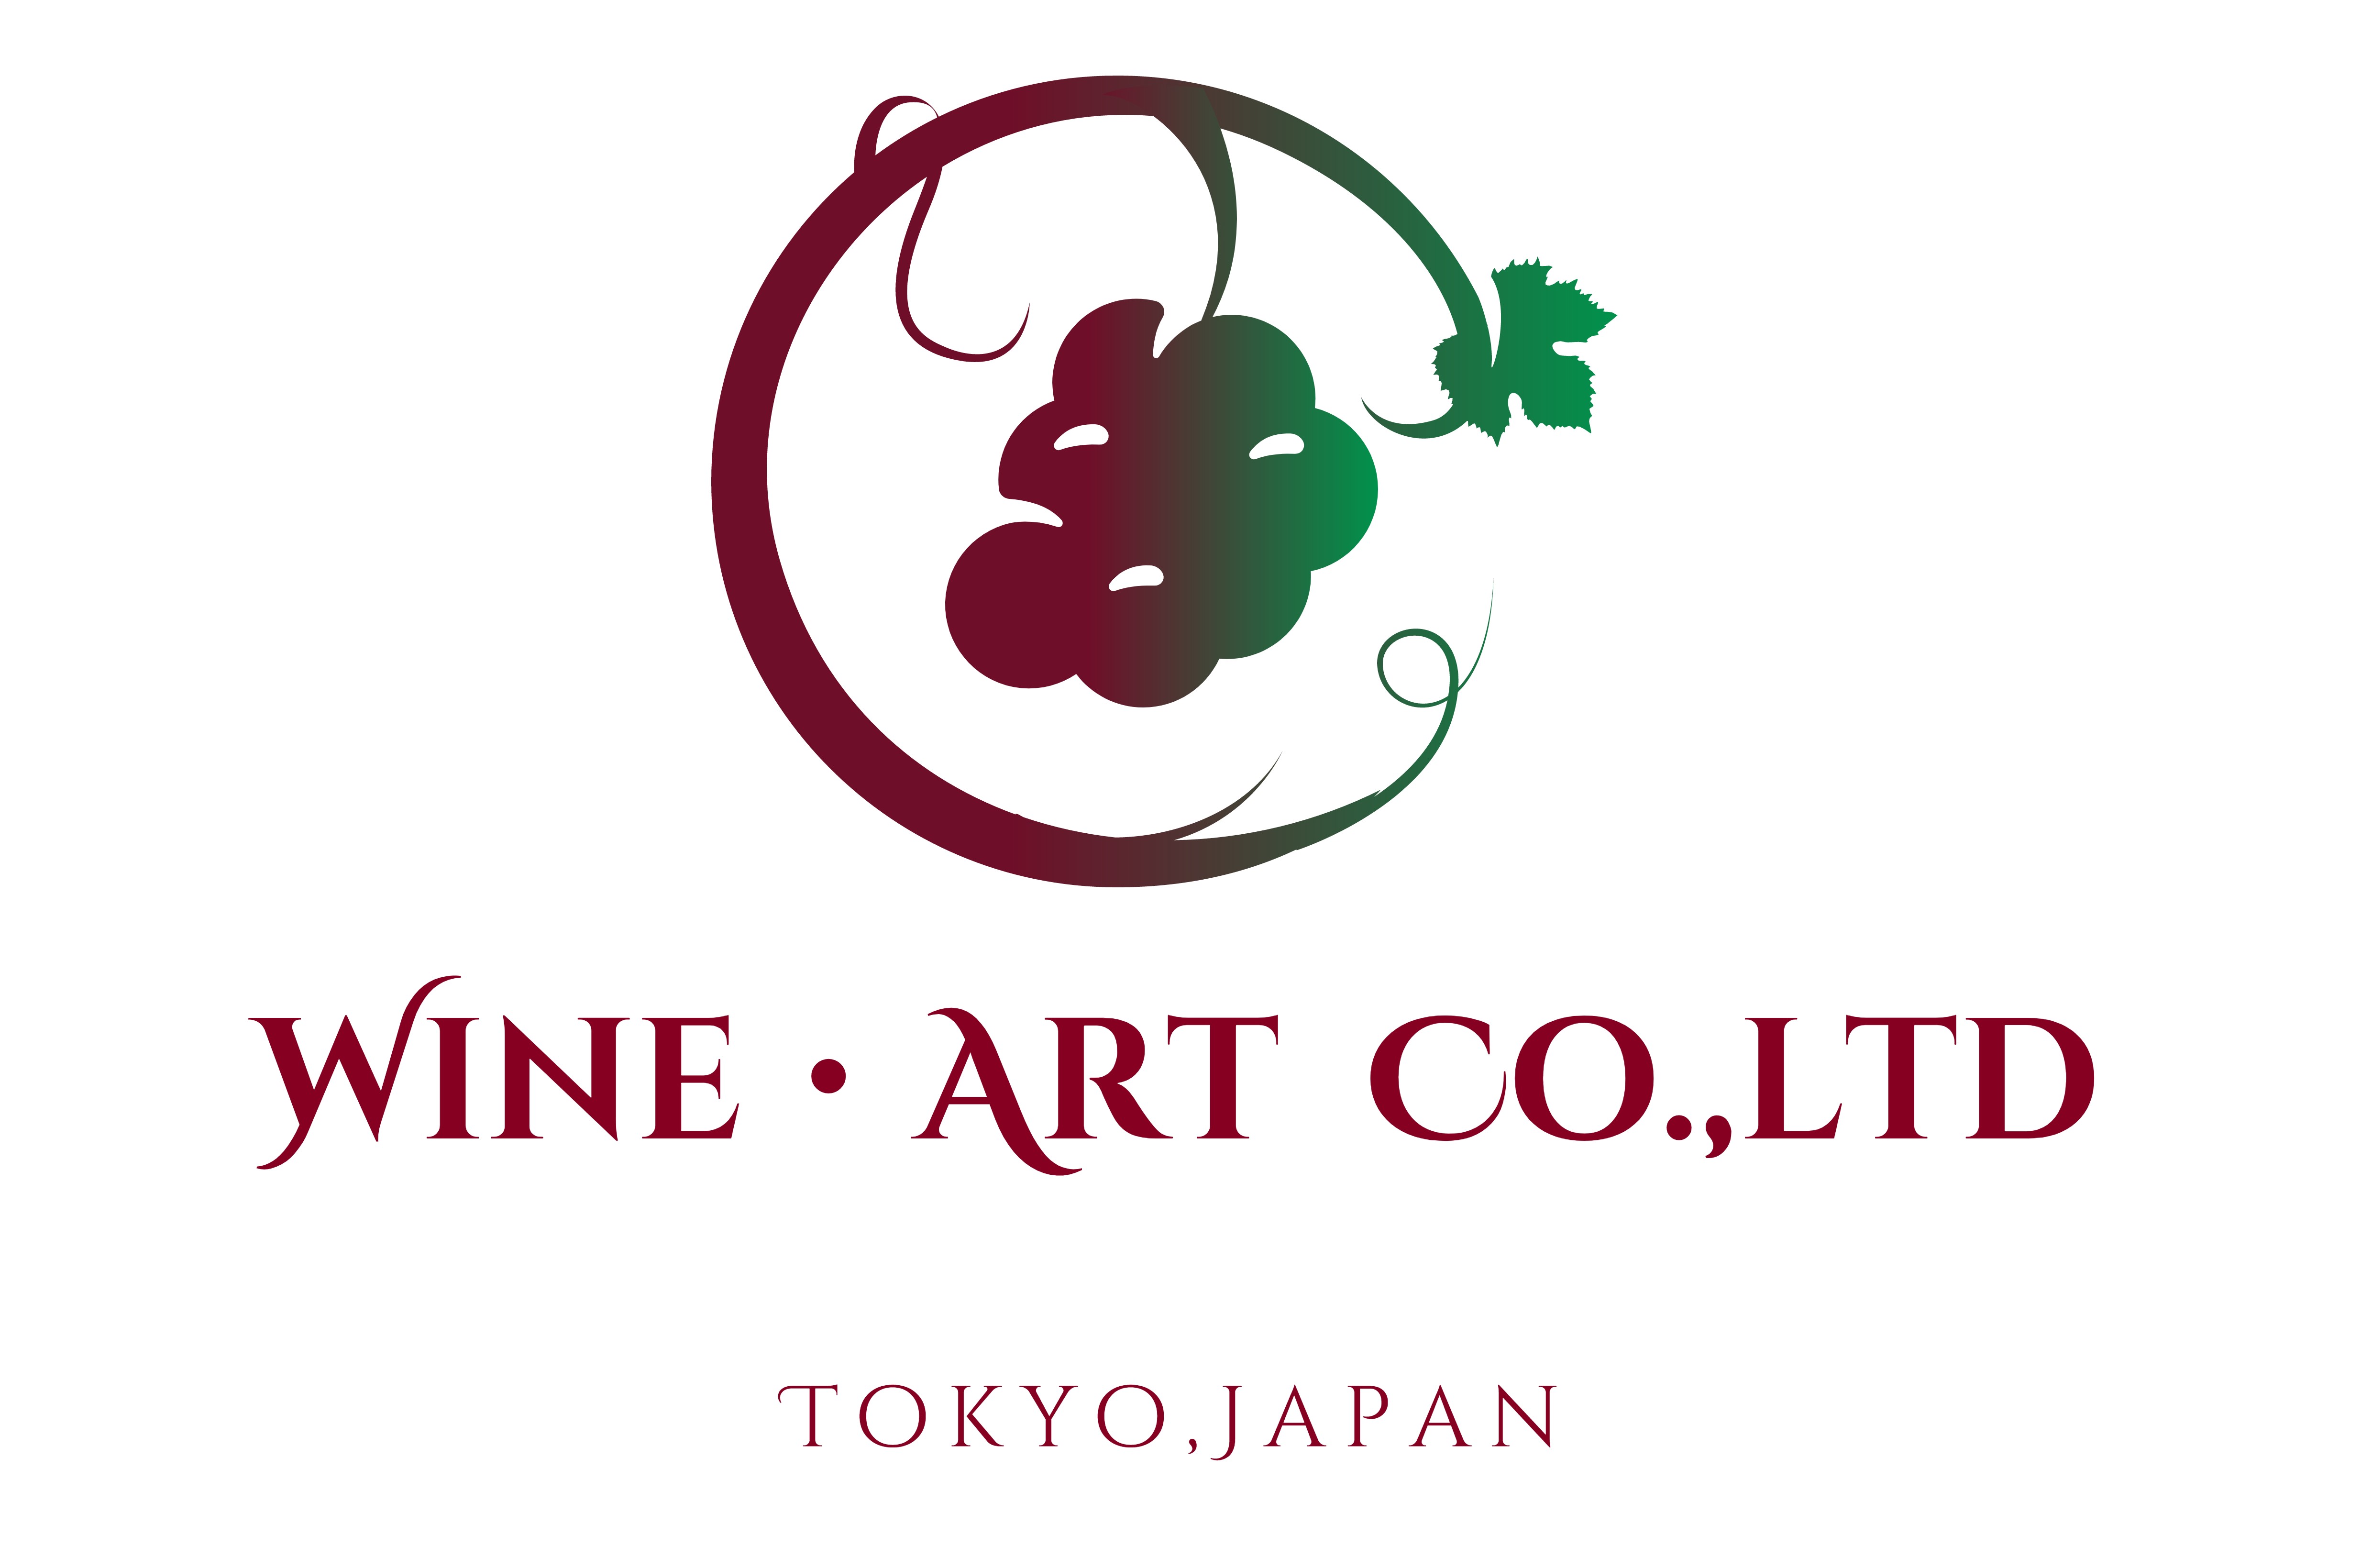 株式会社Wine・Art